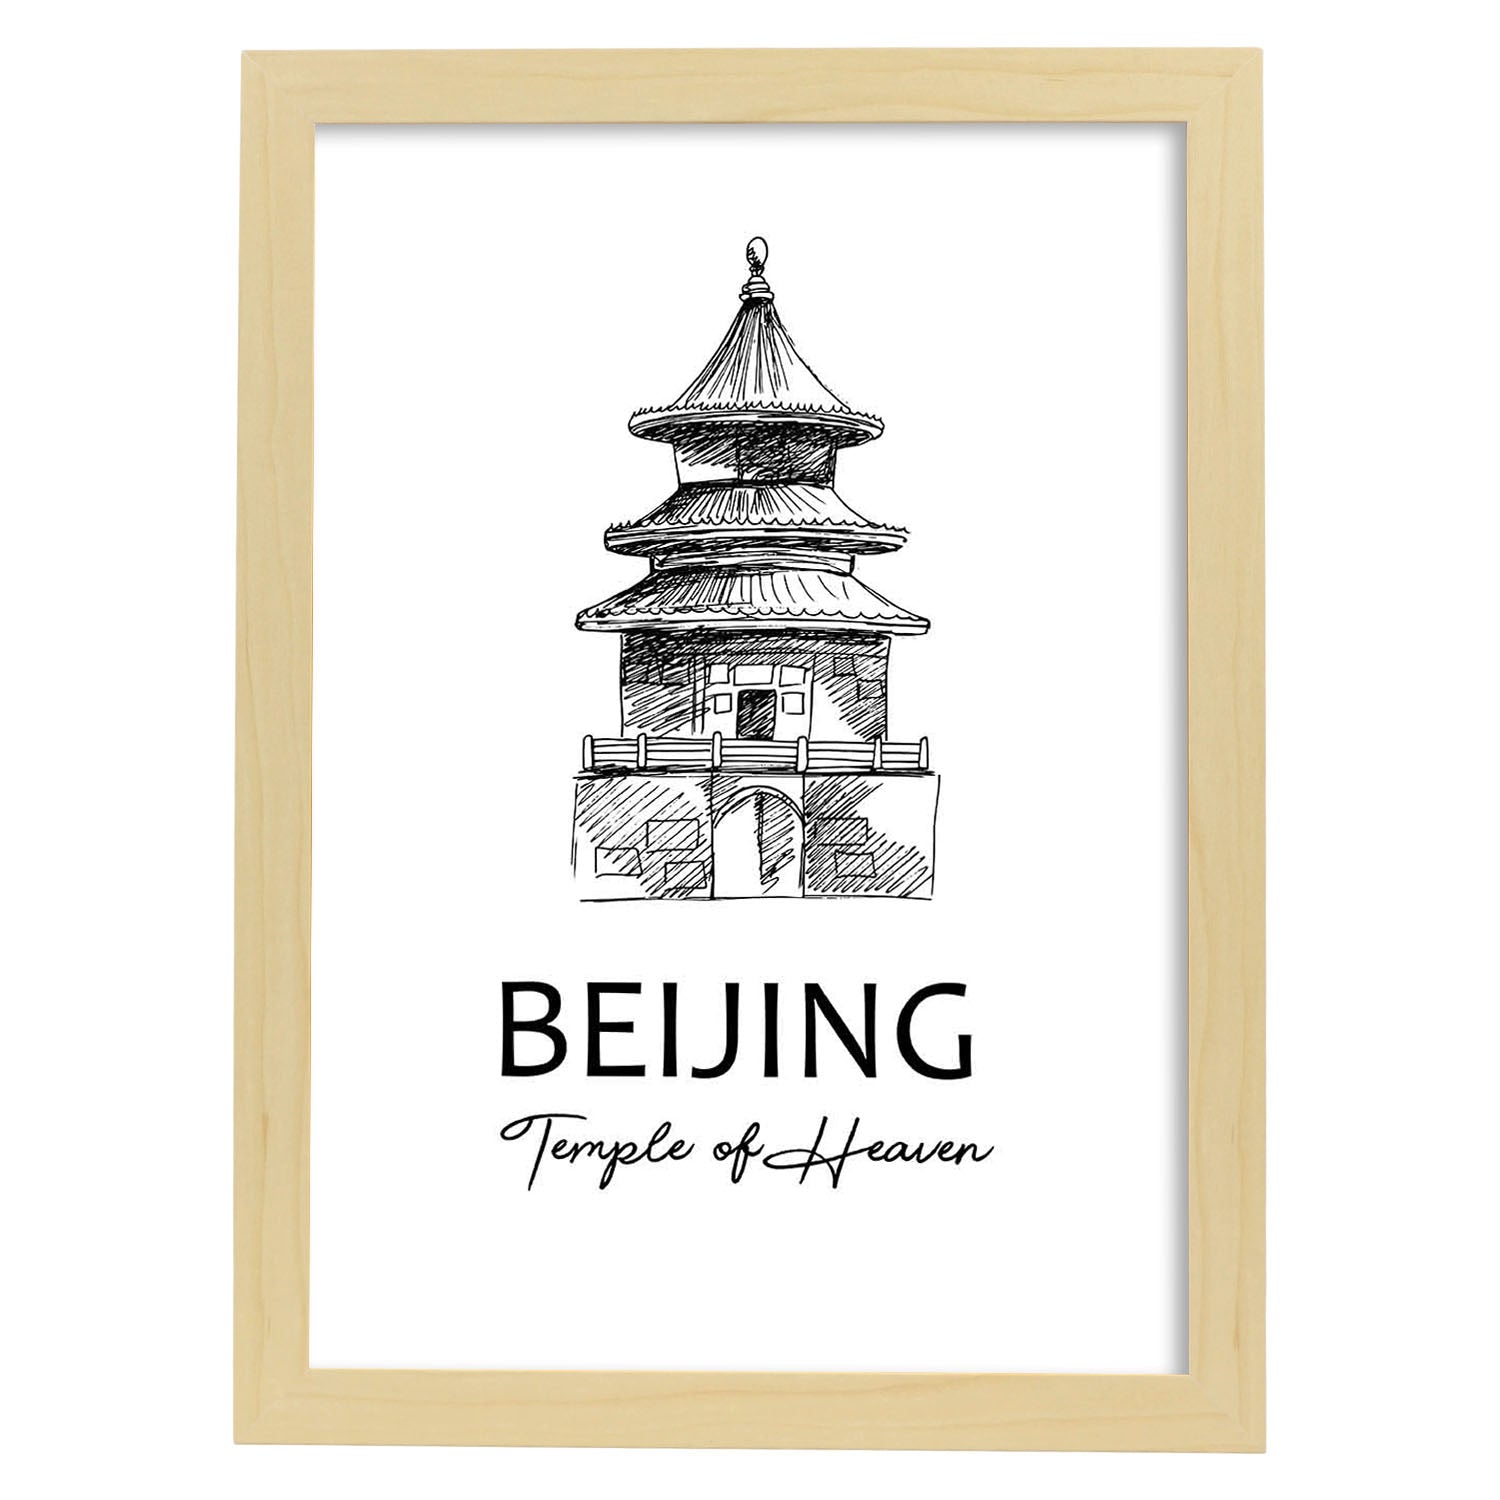 Poster de Beijing - Templo del cielo. Láminas con monumentos de ciudades.-Artwork-Nacnic-A3-Marco Madera clara-Nacnic Estudio SL